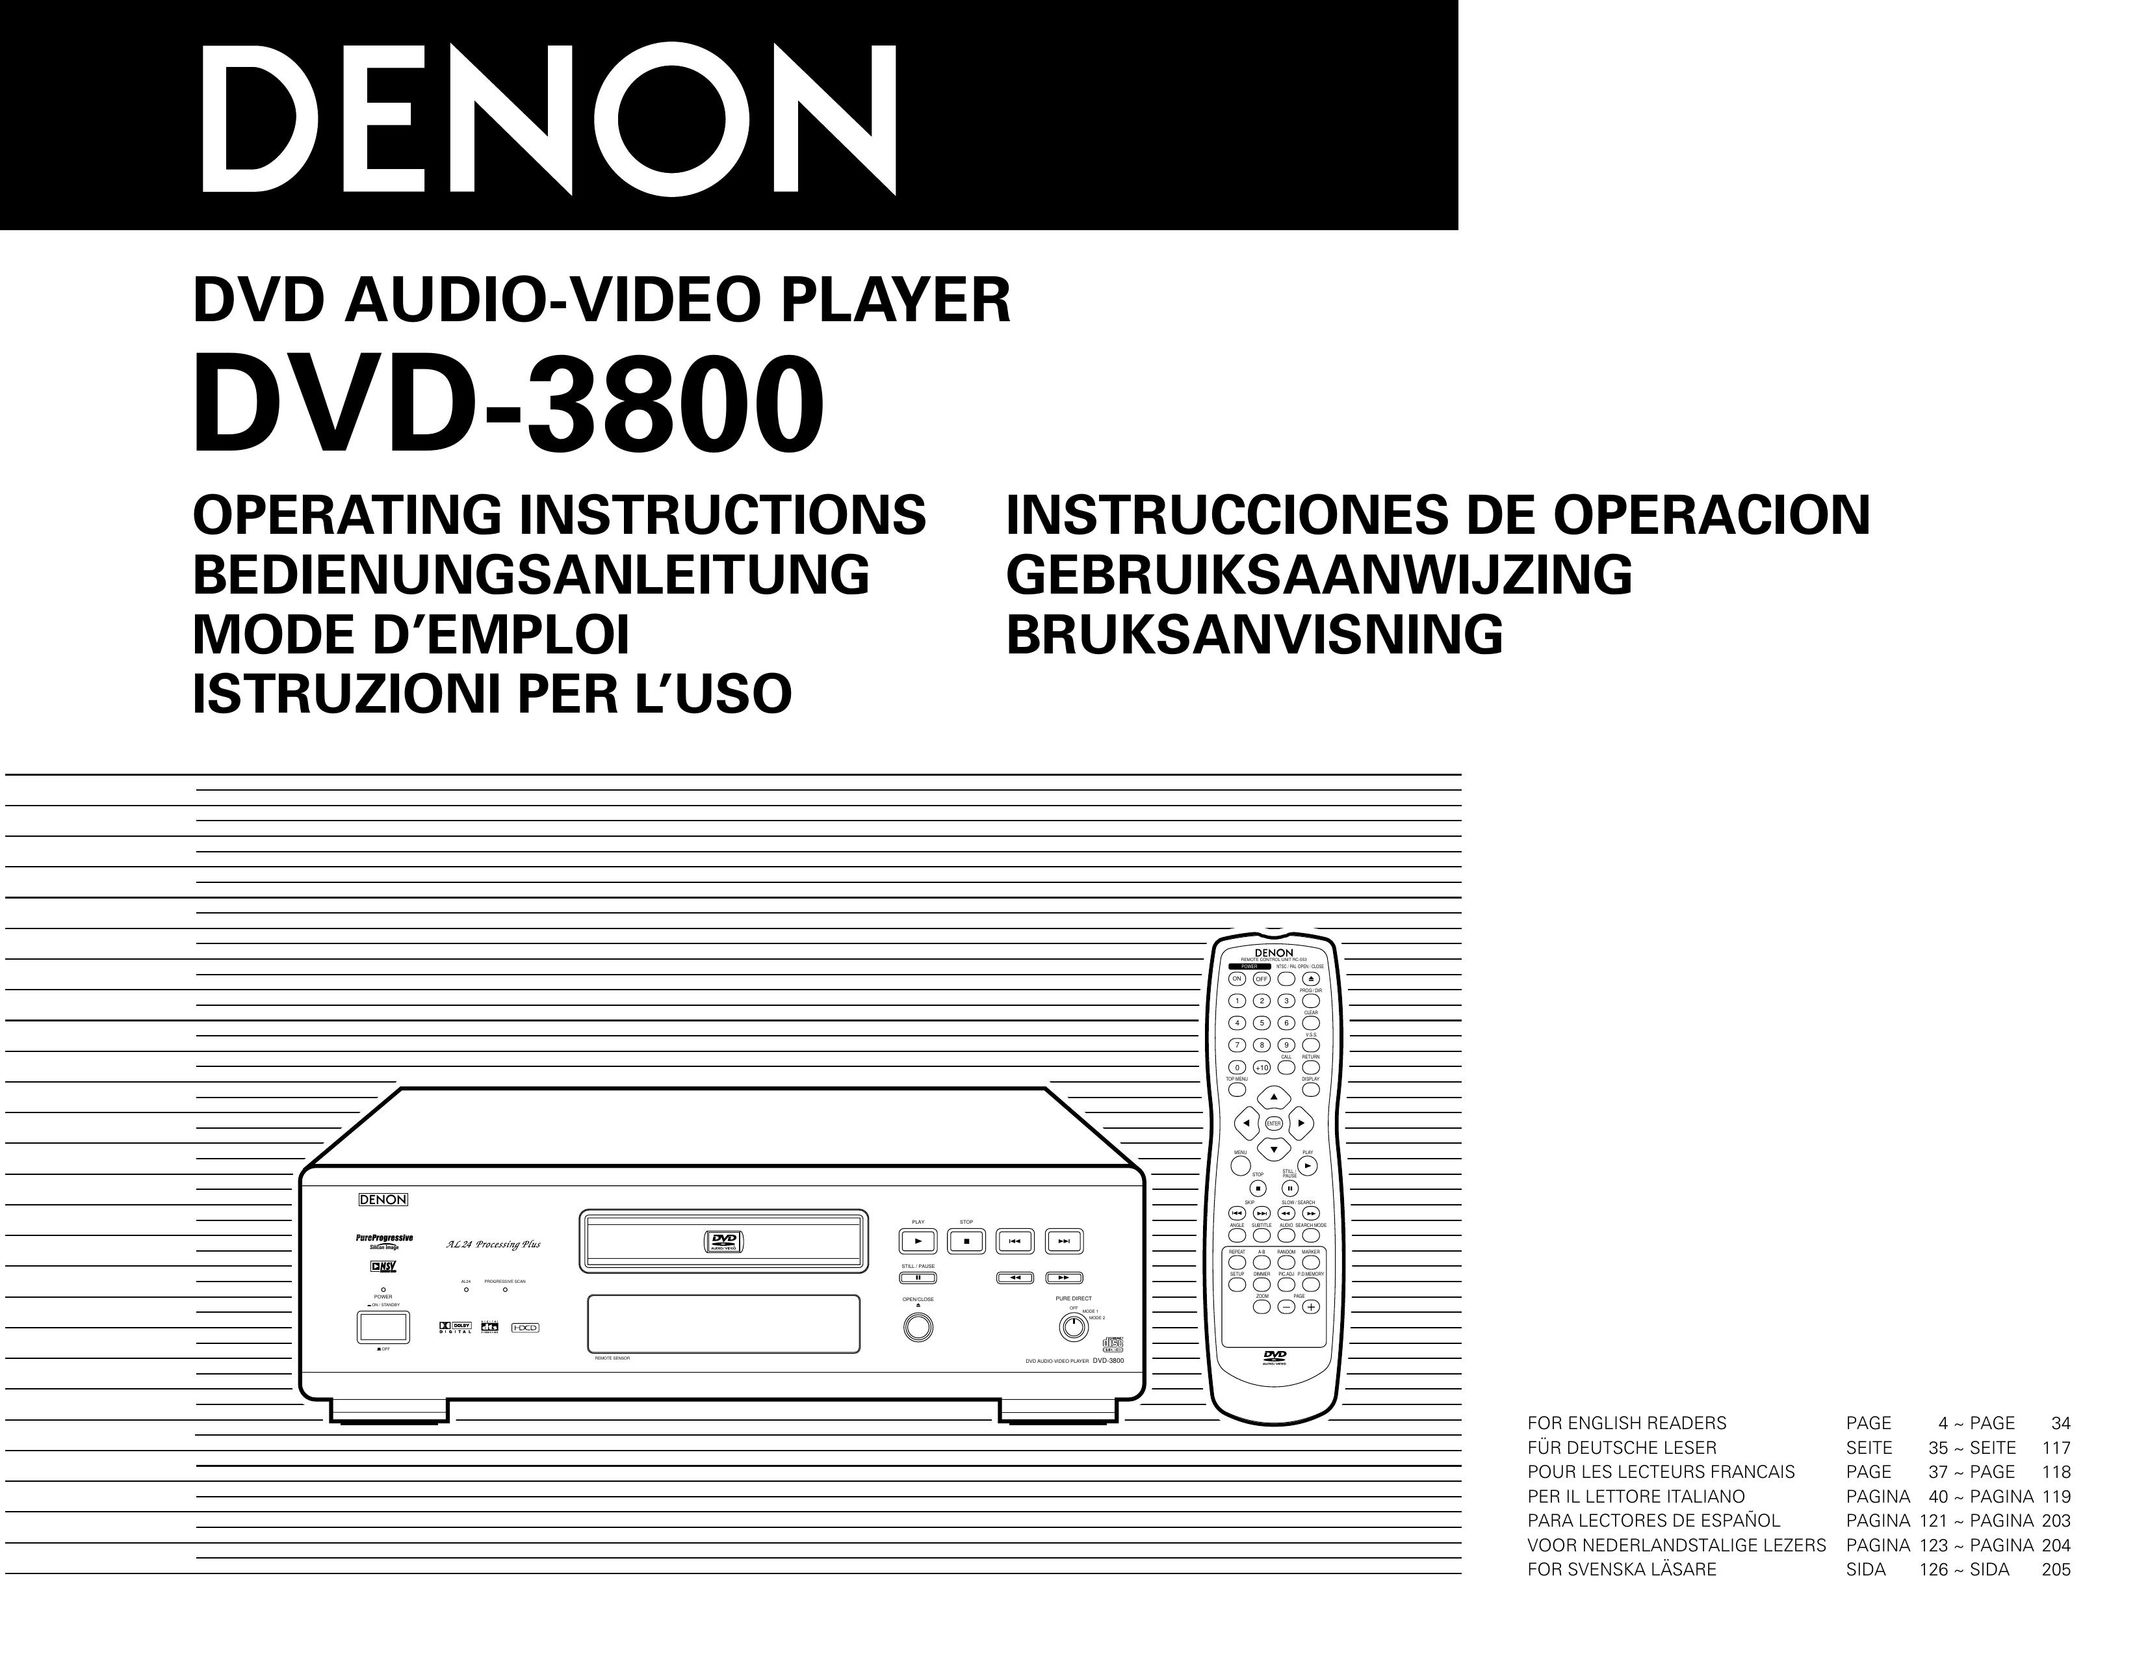 Denon DVD-3800 DVD Player User Manual